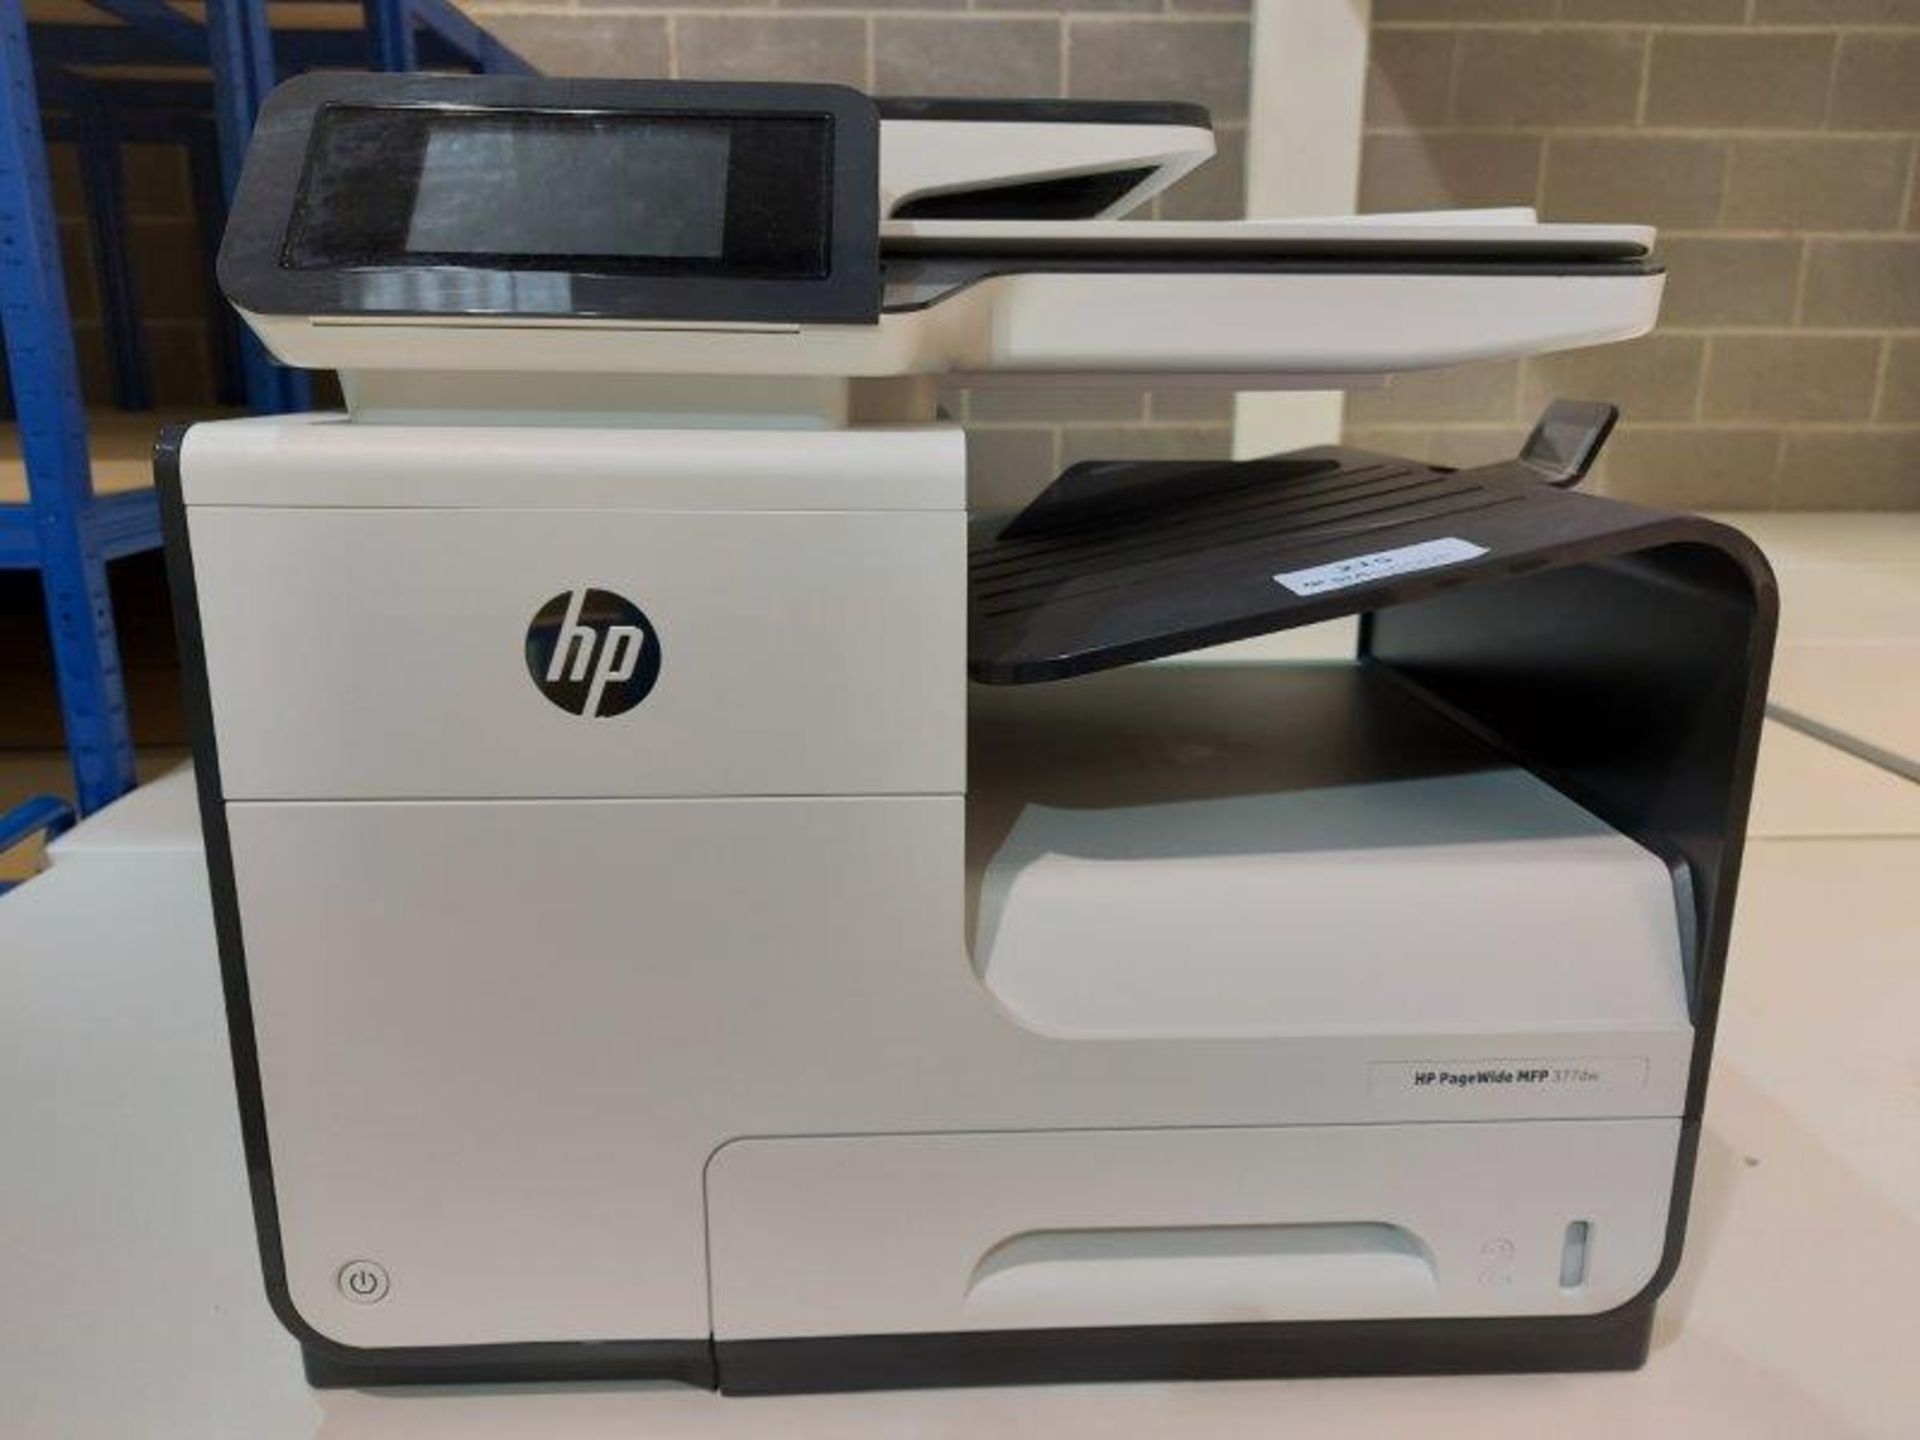 HP Pagewide MFP377dw printer